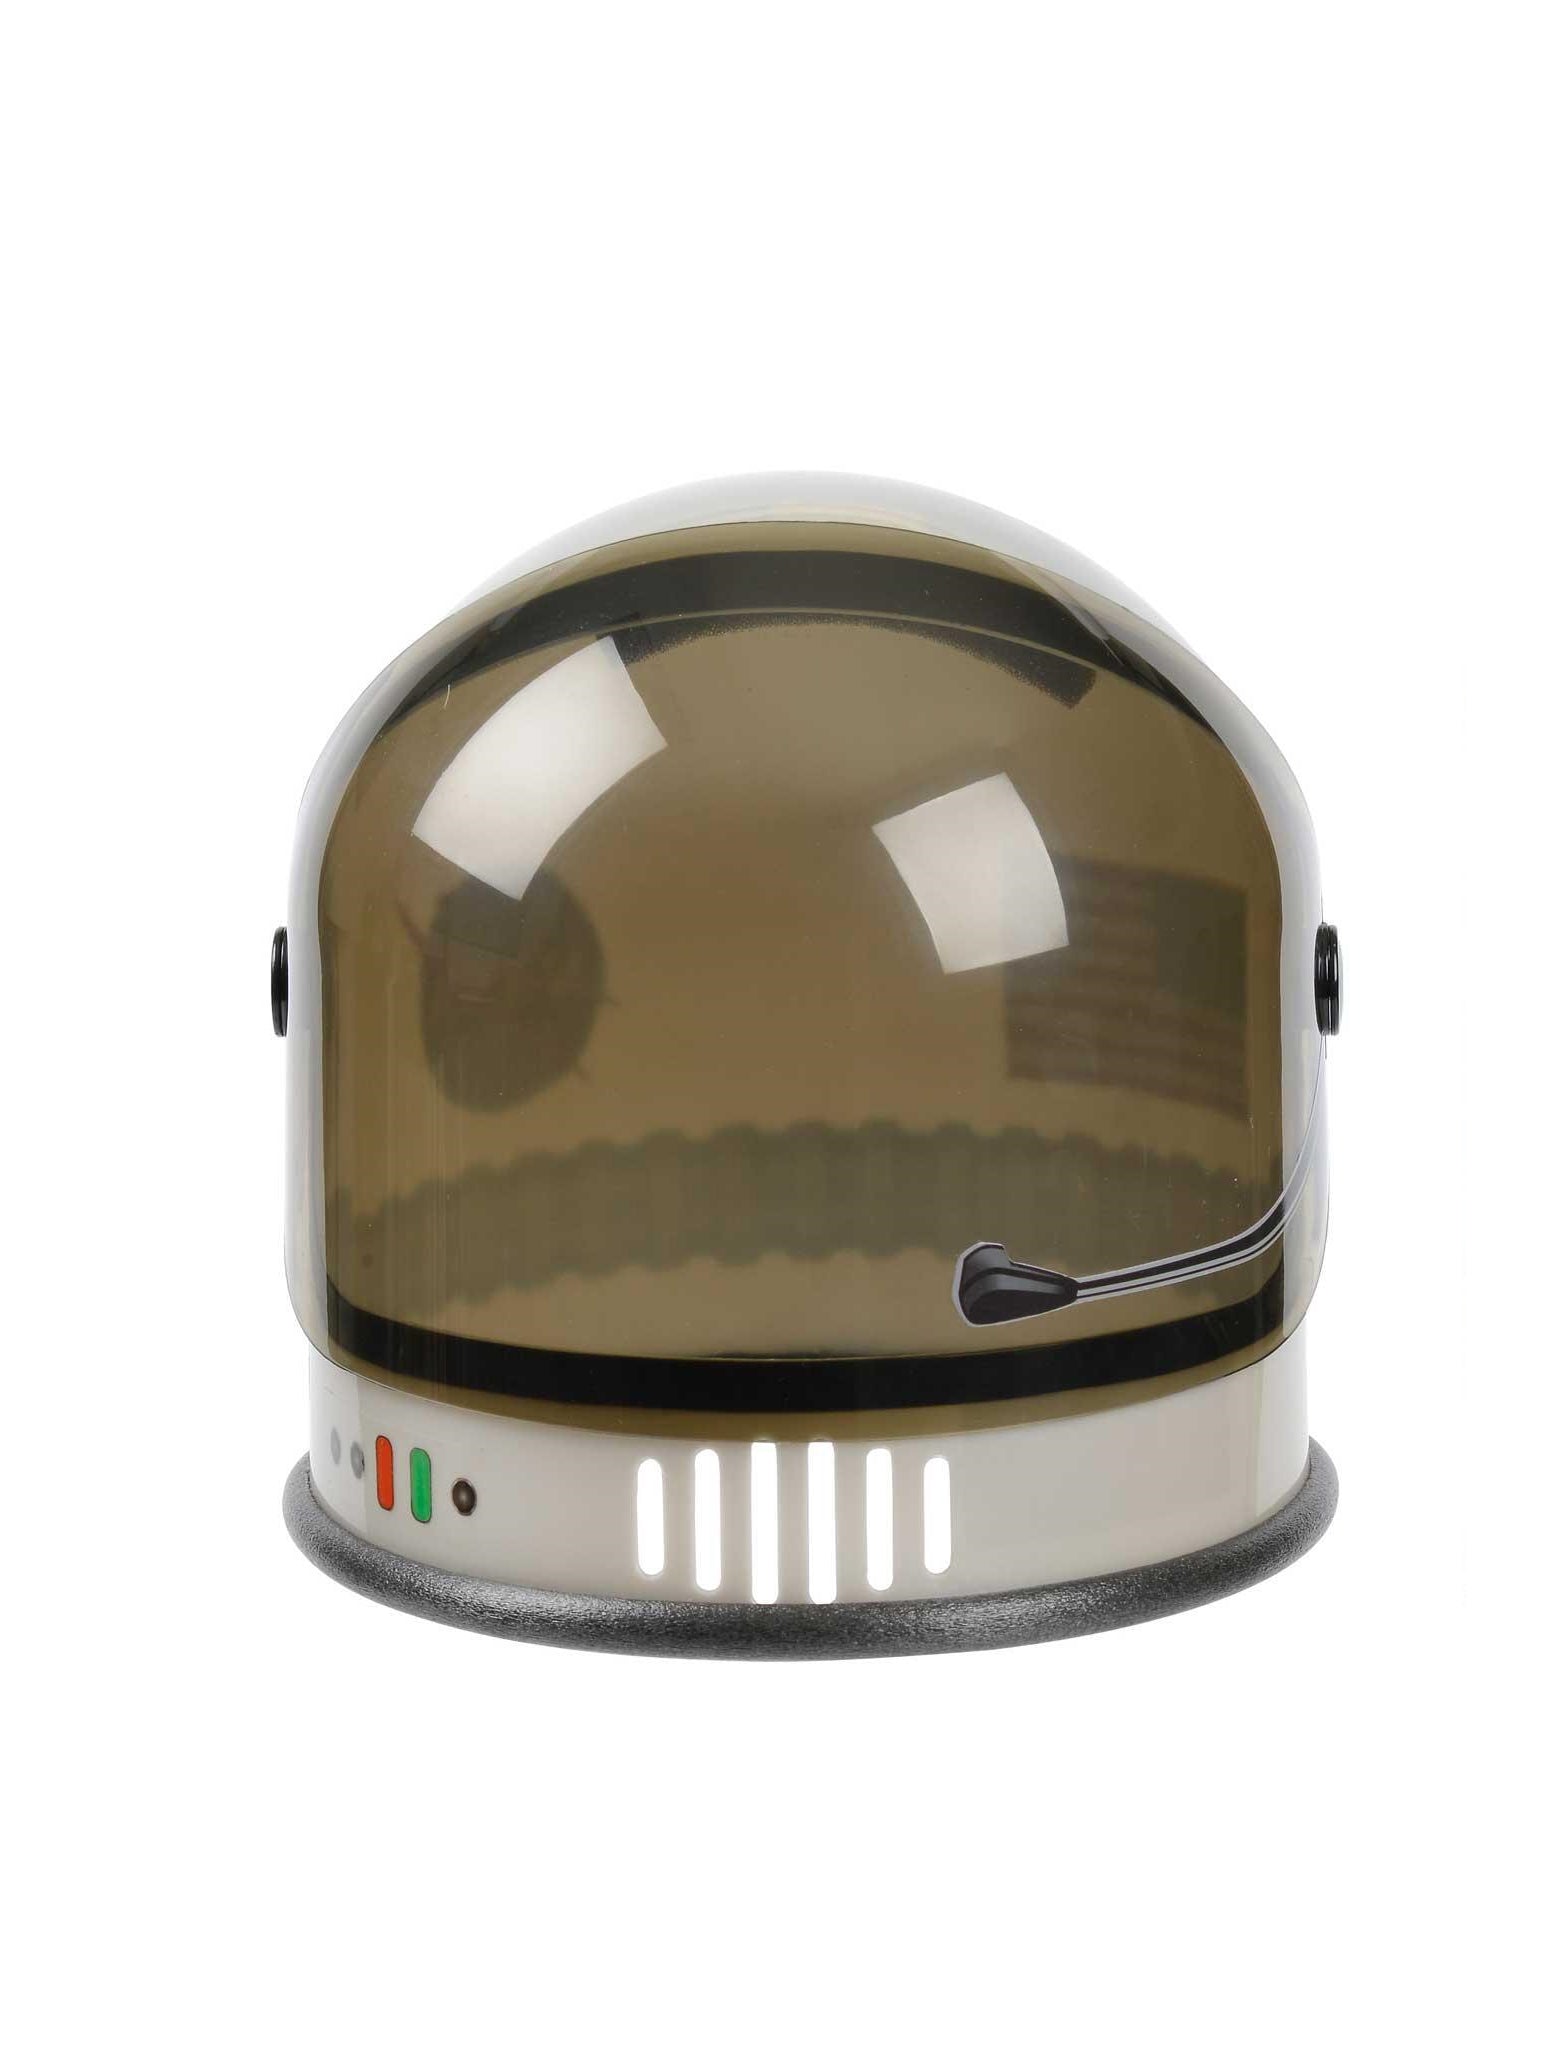 Silver Nasa Astronaut Helmet For Kids Chasing Fireflies